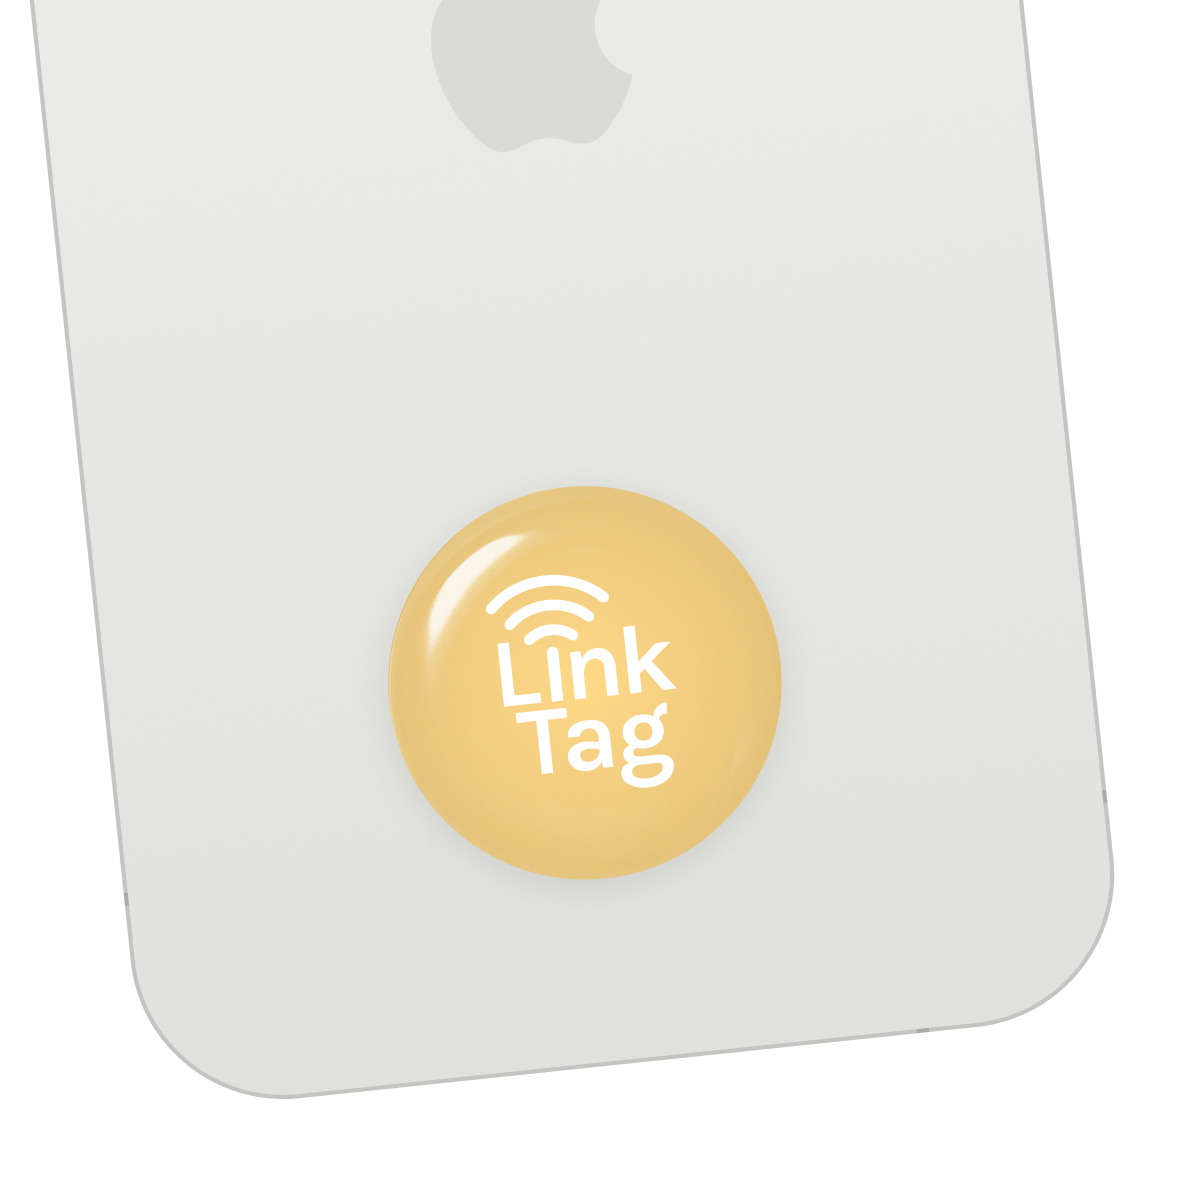 LinkTag Yellow Sticker on Phone